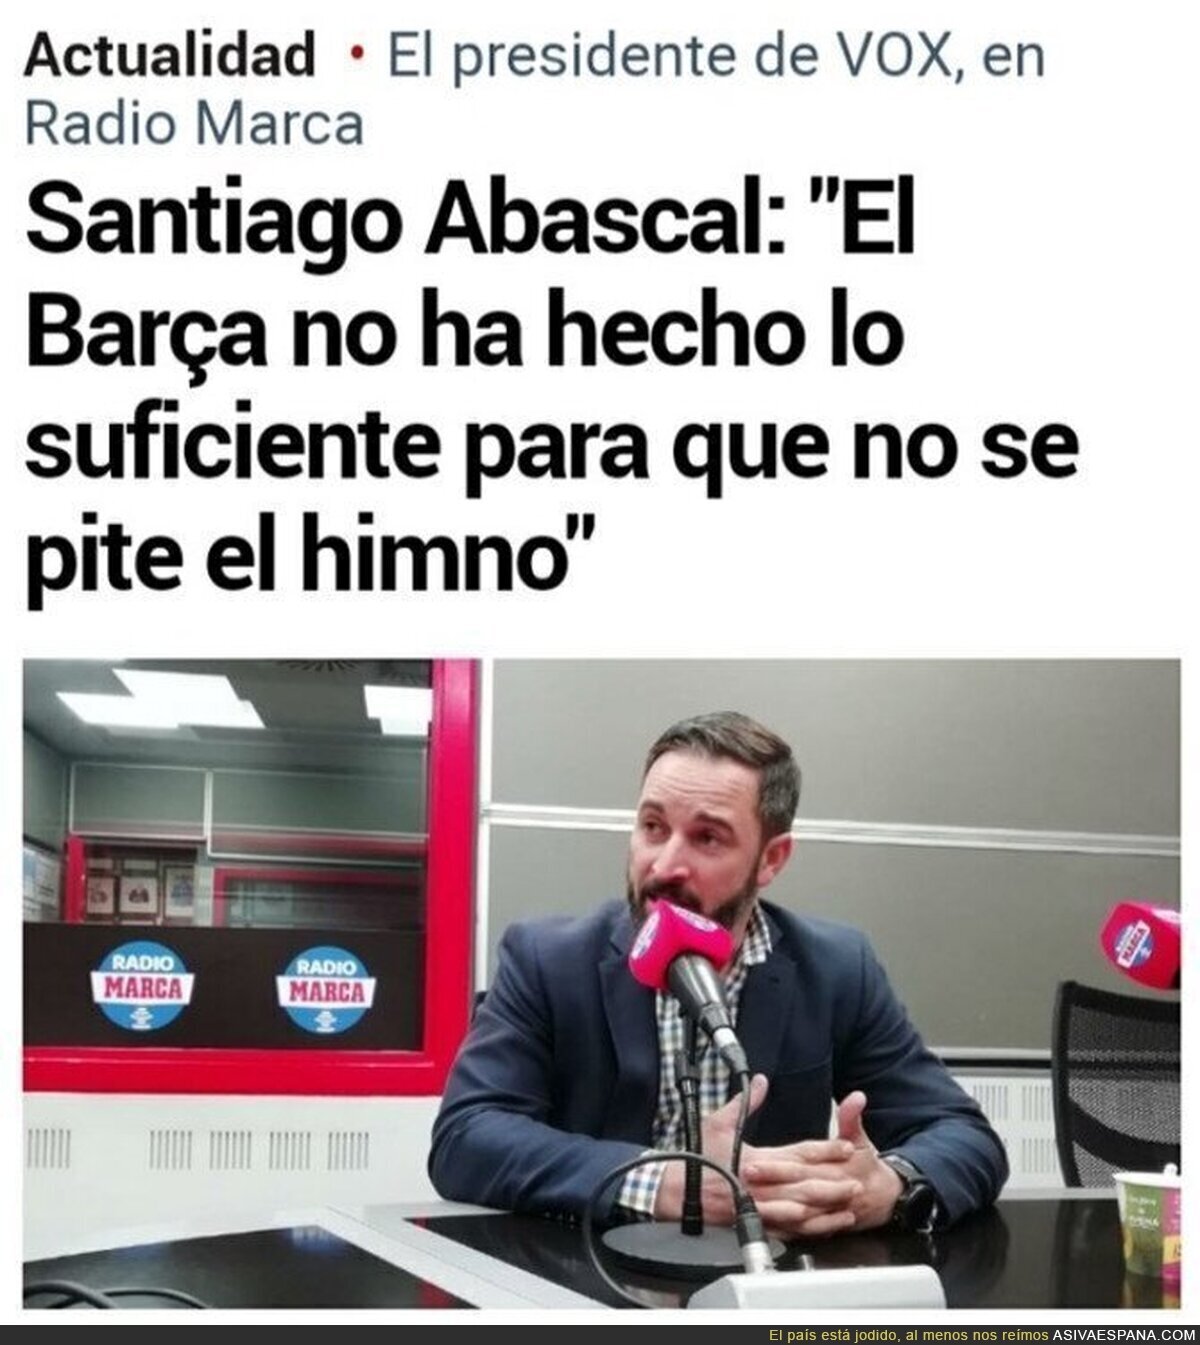 Vergonzosa operación para blanquear a Santiago Abascal y a VOX